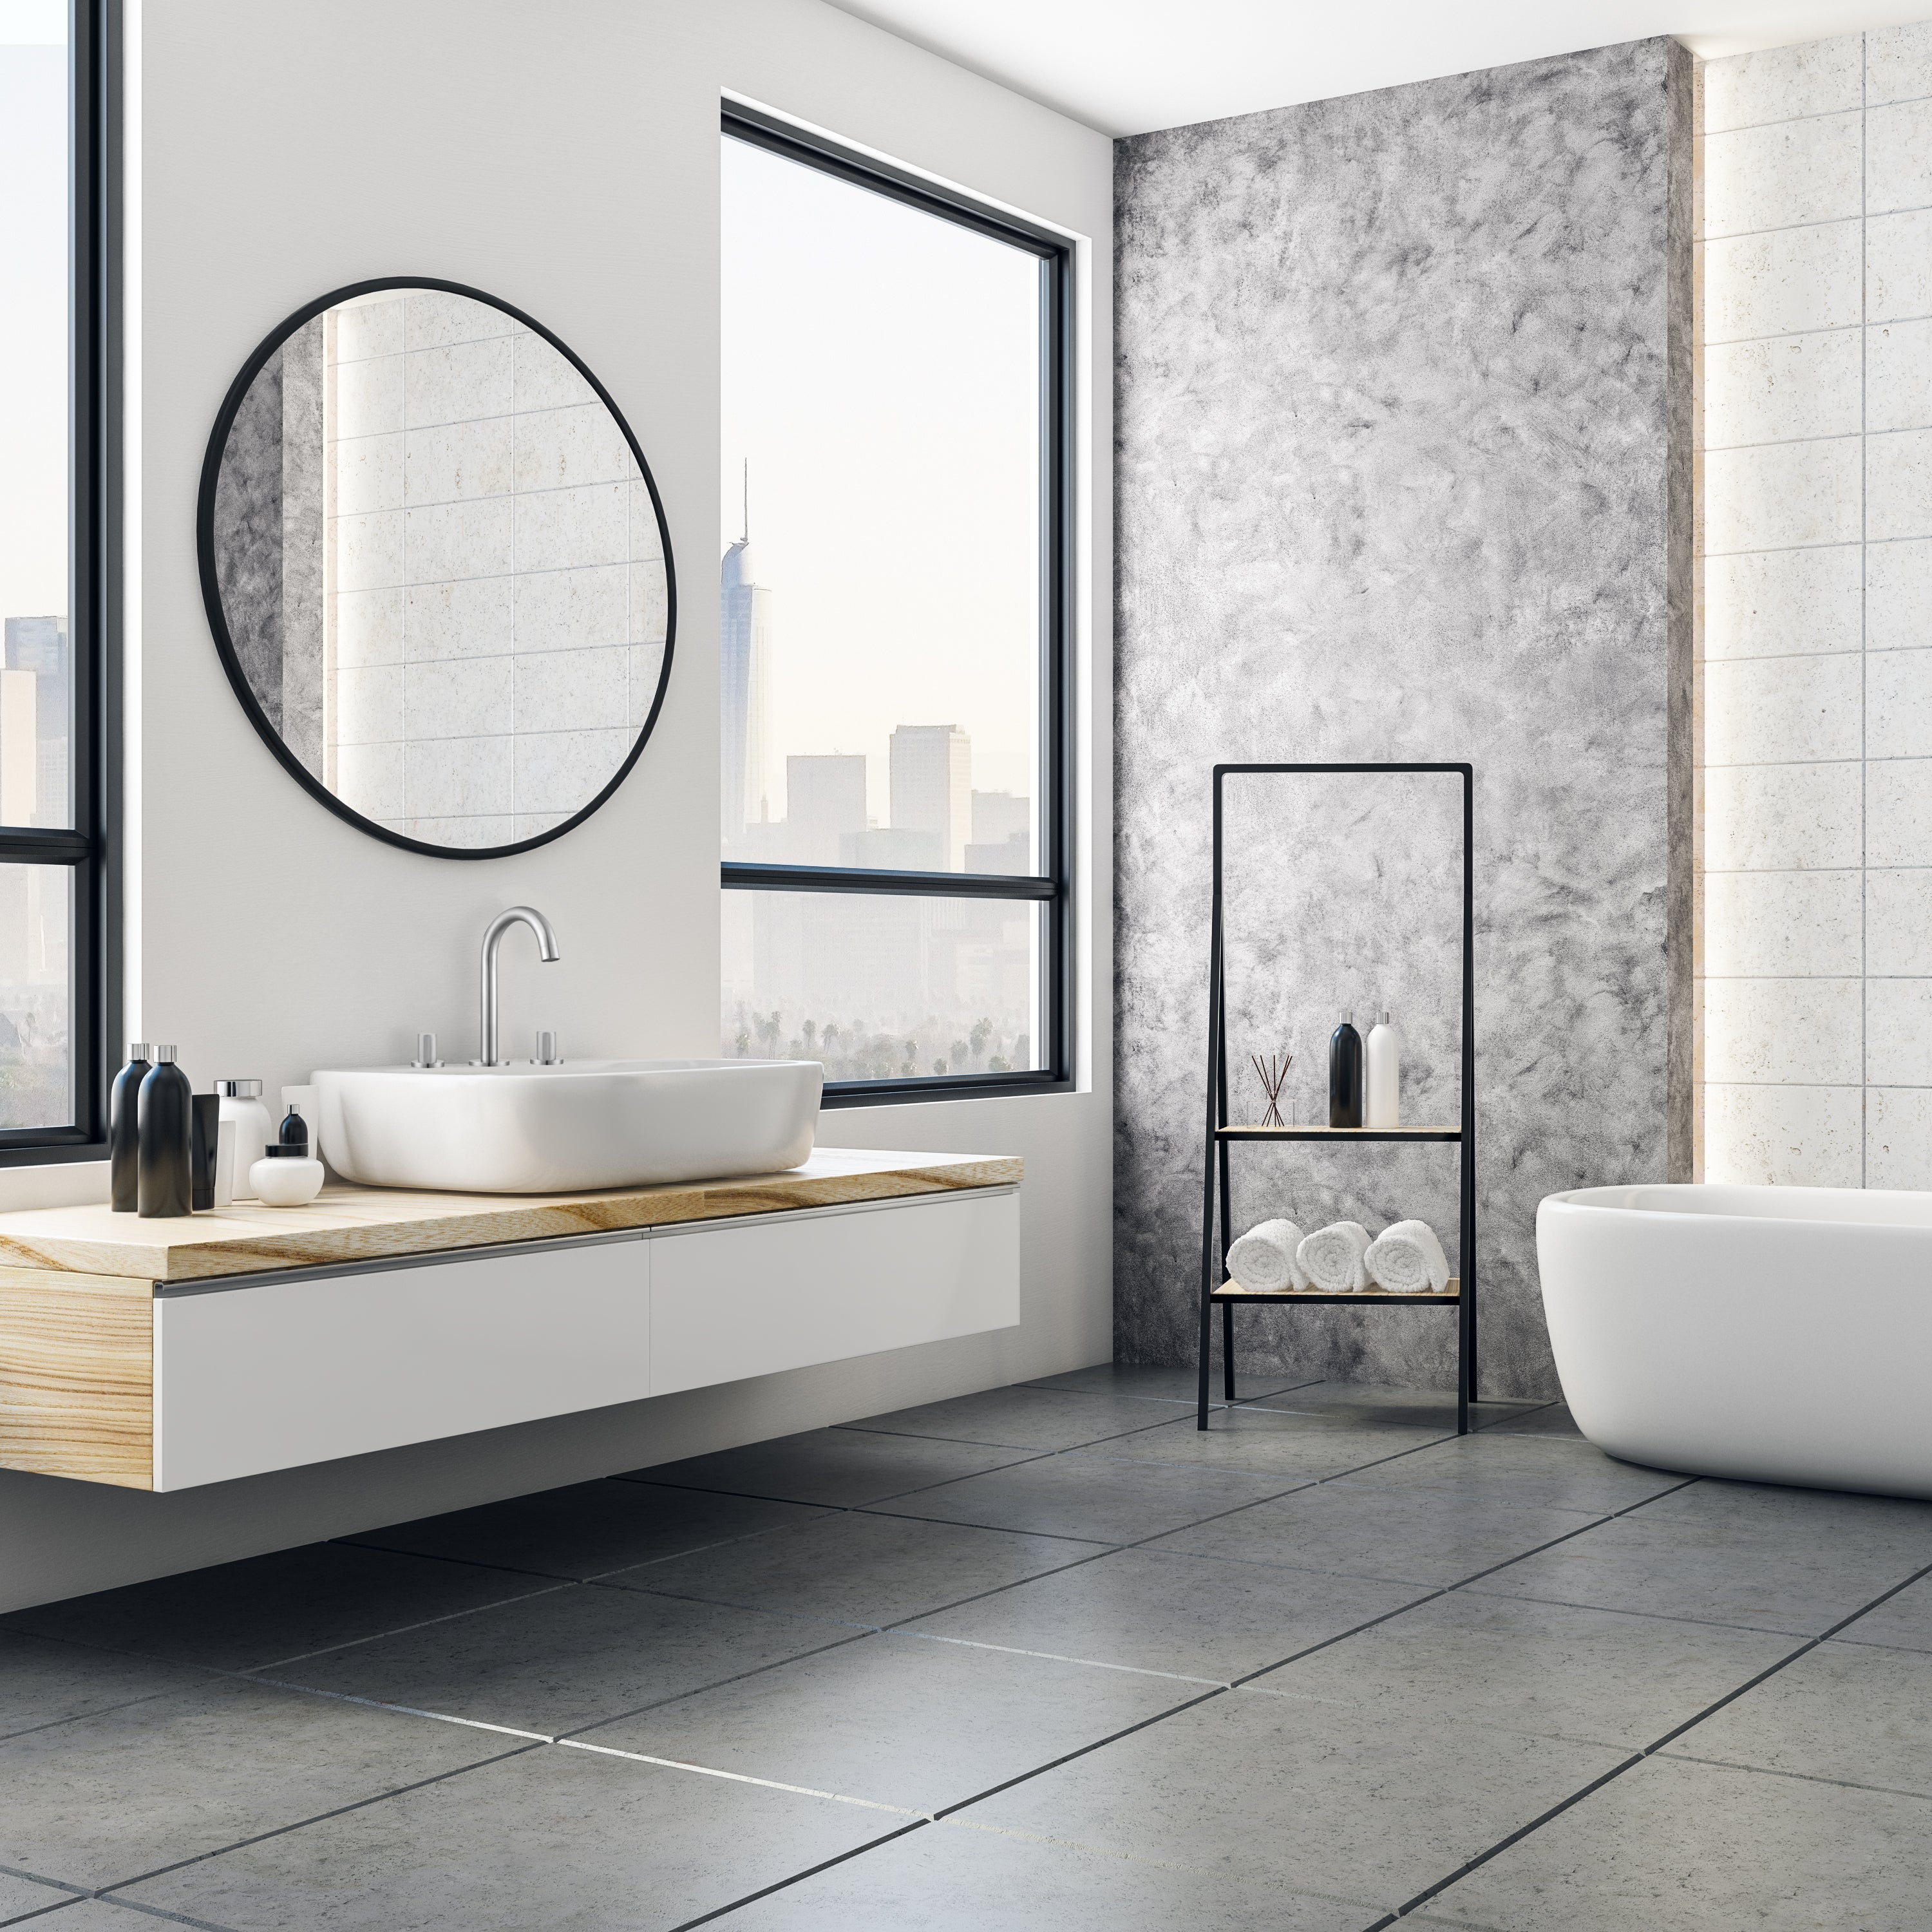 Ancona Industria Series Widespread Bathroom Faucet in Brushed Nickel